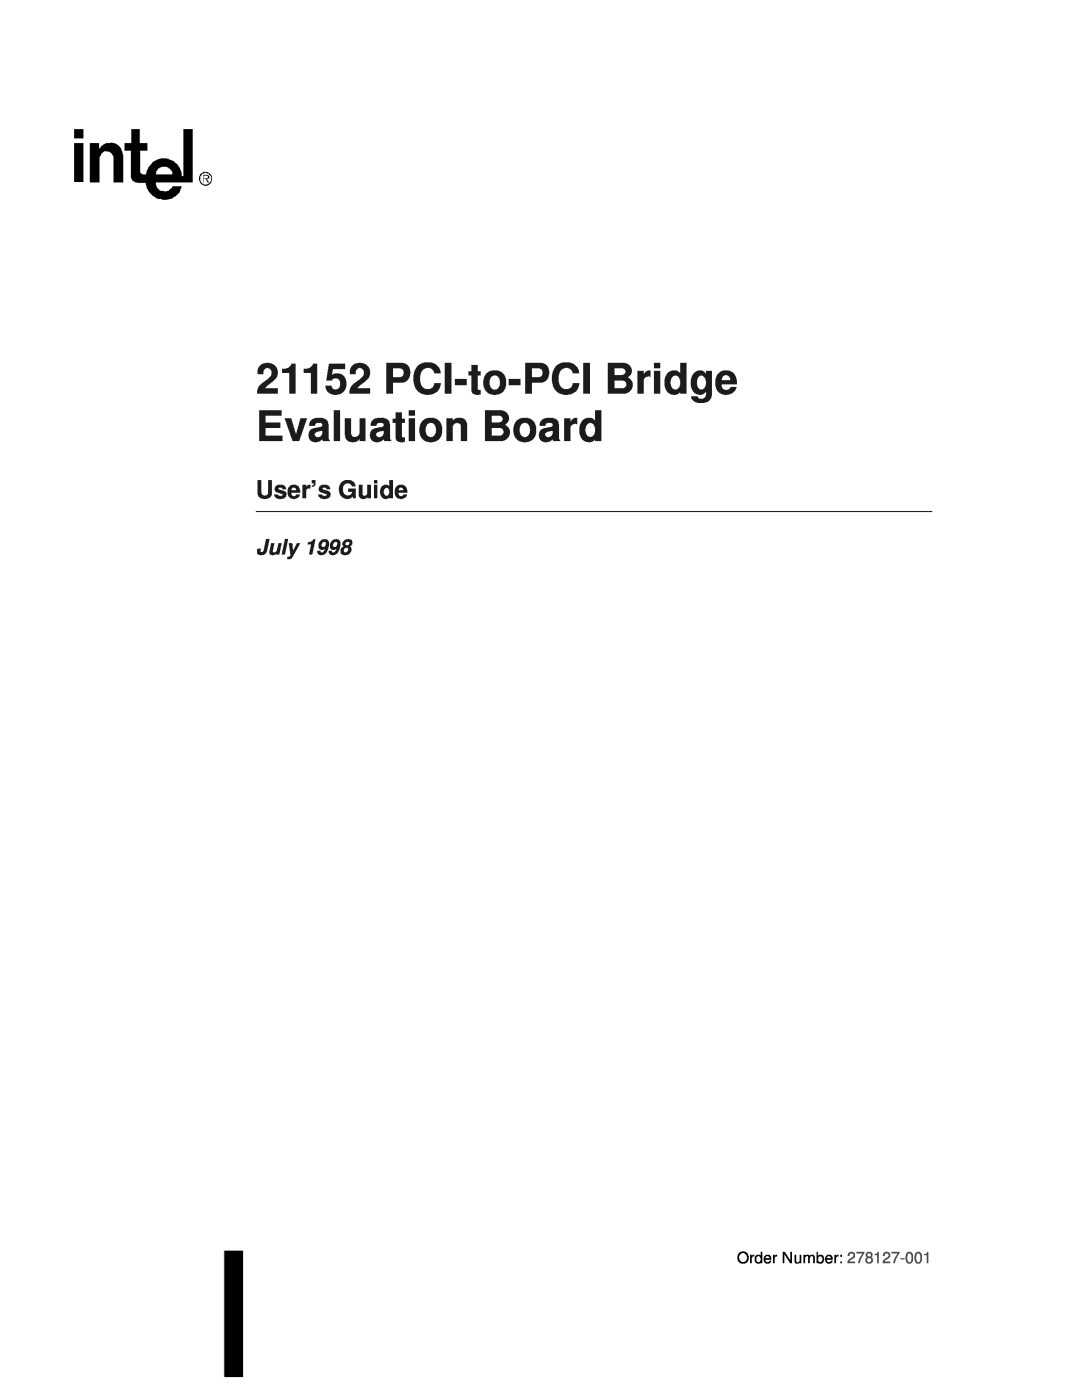 Intel 21152 manual PCI-to-PCI Bridge Evaluation Board, User’s Guide, July 